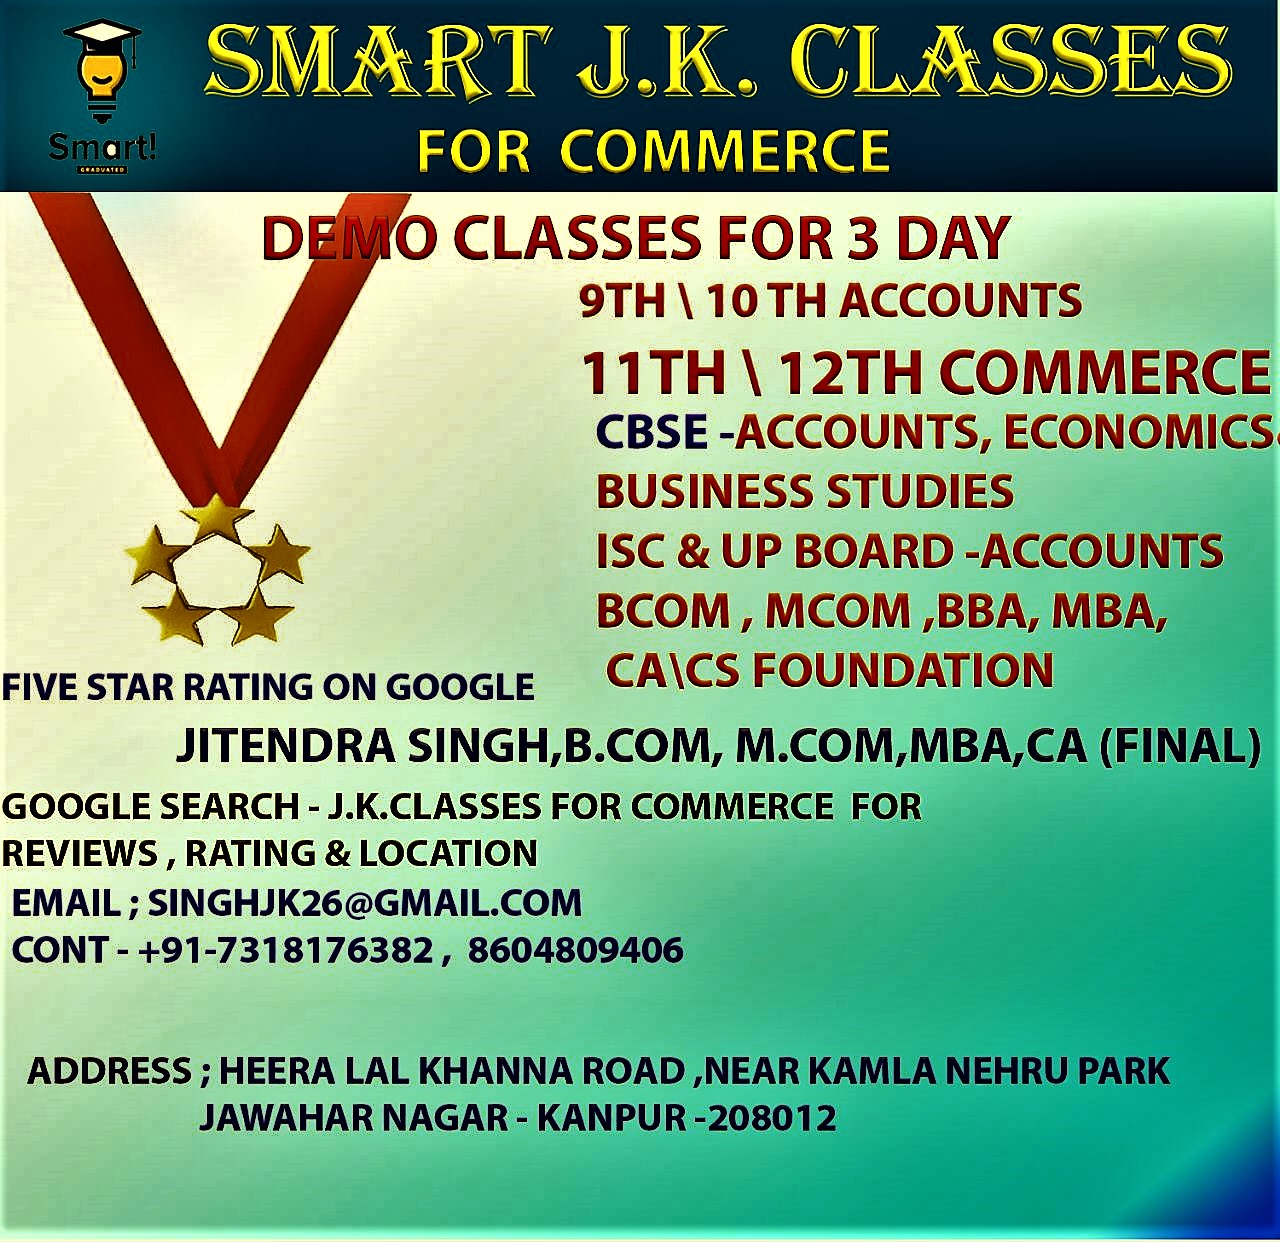 24101SMART JK CLASSES for COMMERCE
Class 11th – Business Studies